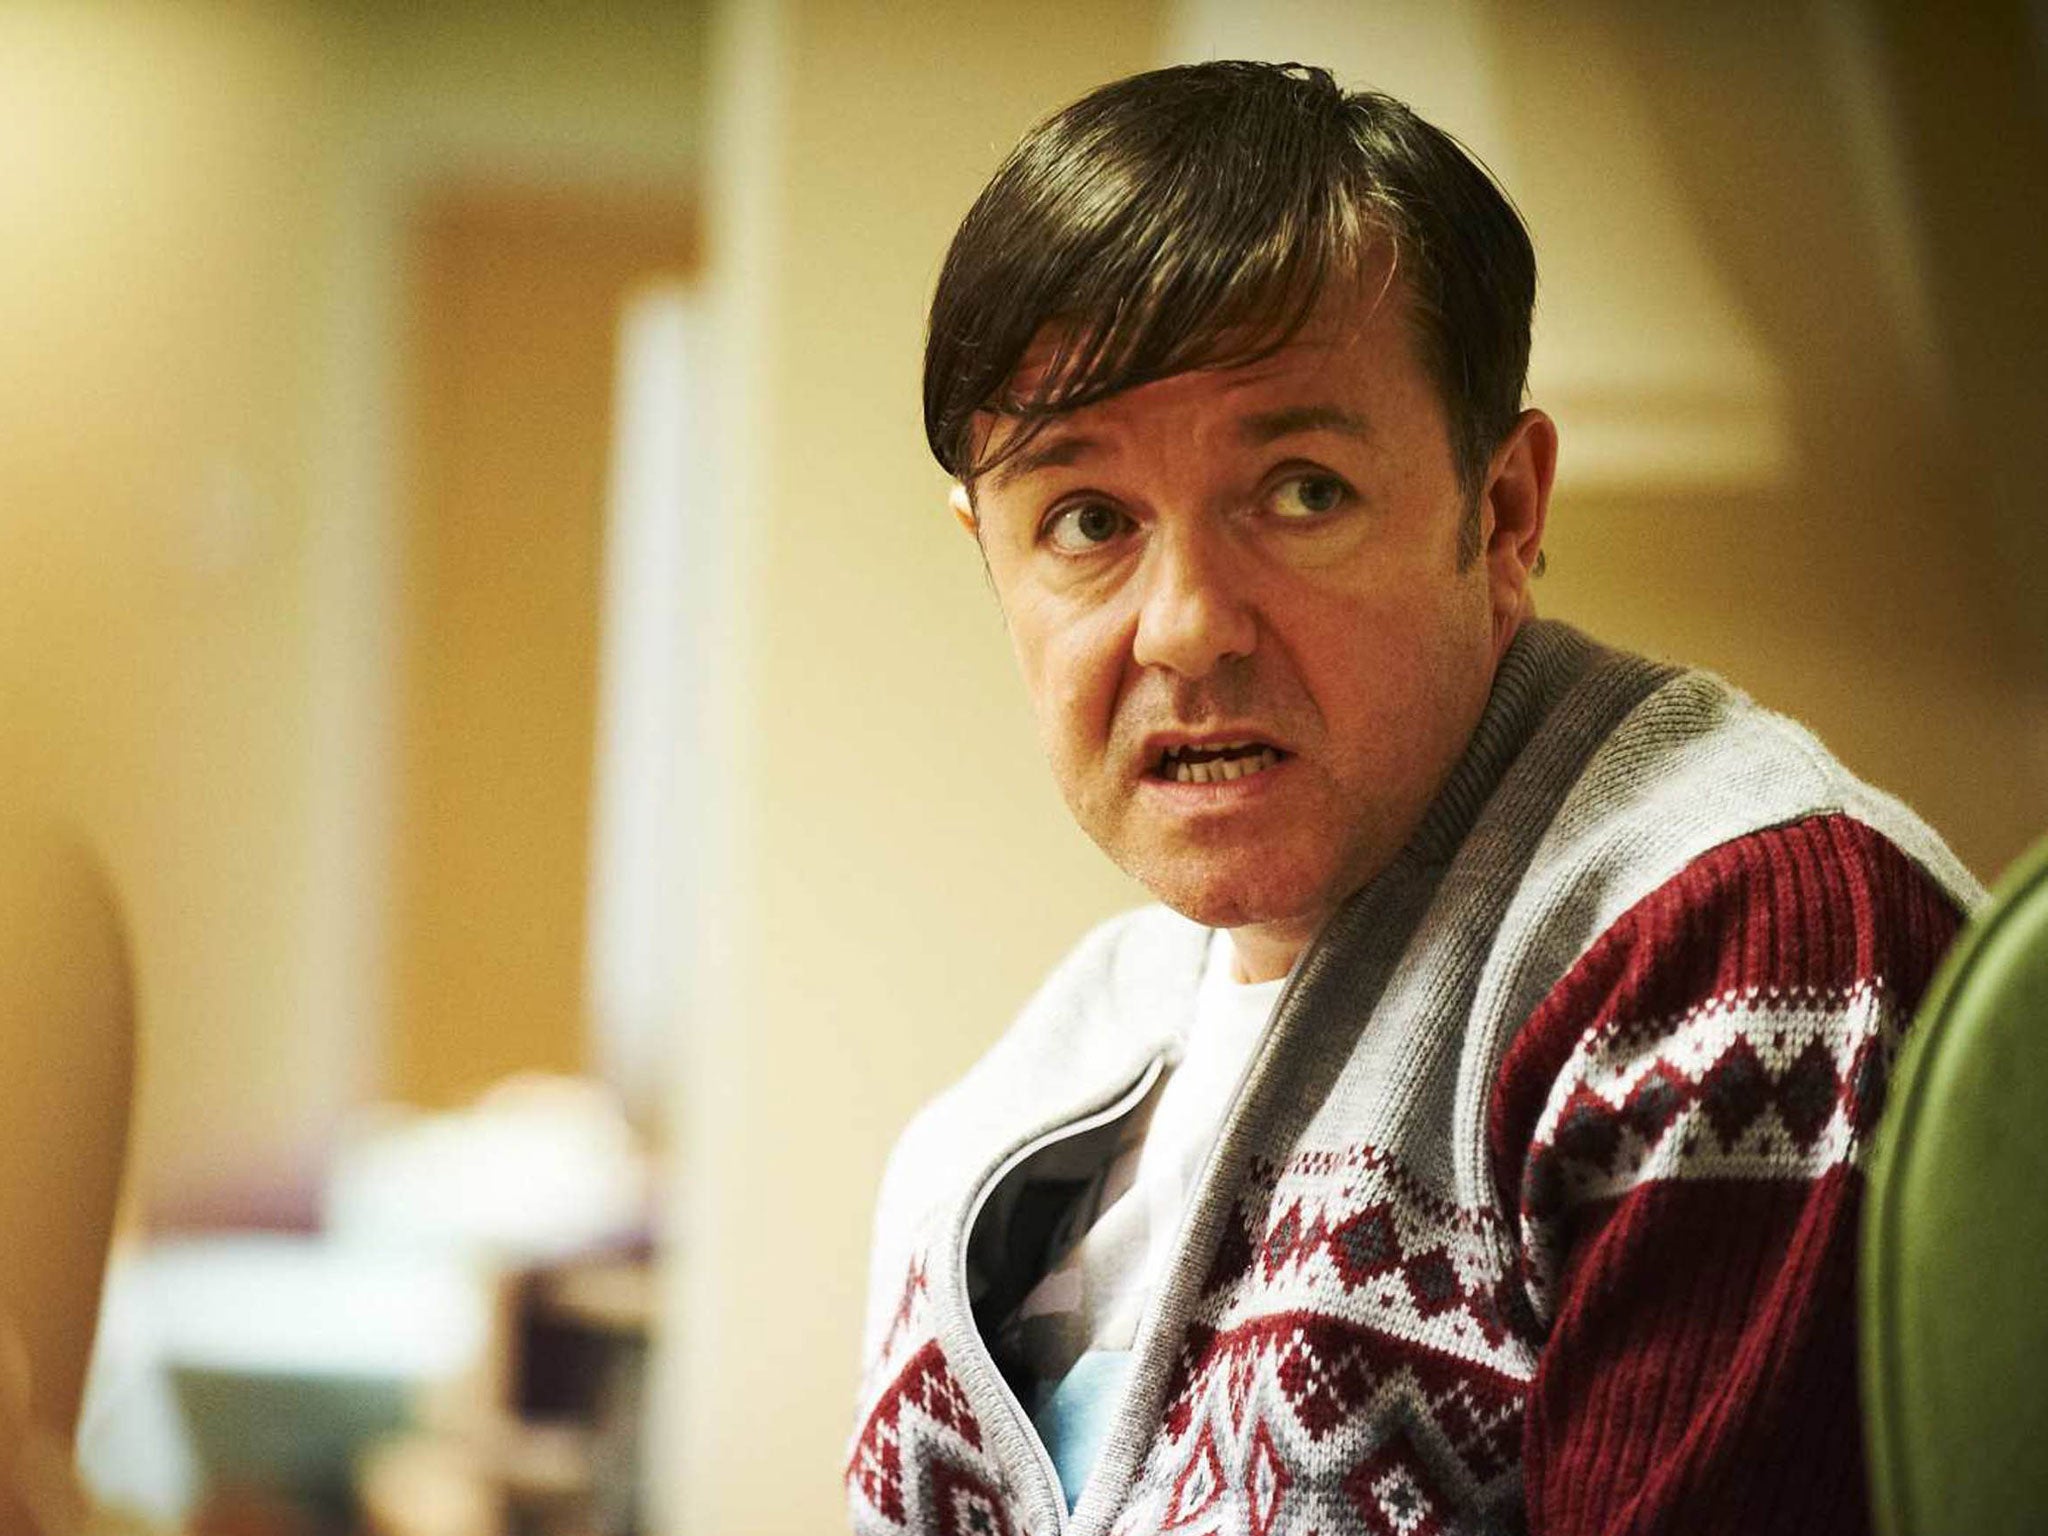 Cringeworthy: Ricky Gervais as downtrodden care-home worker Derek